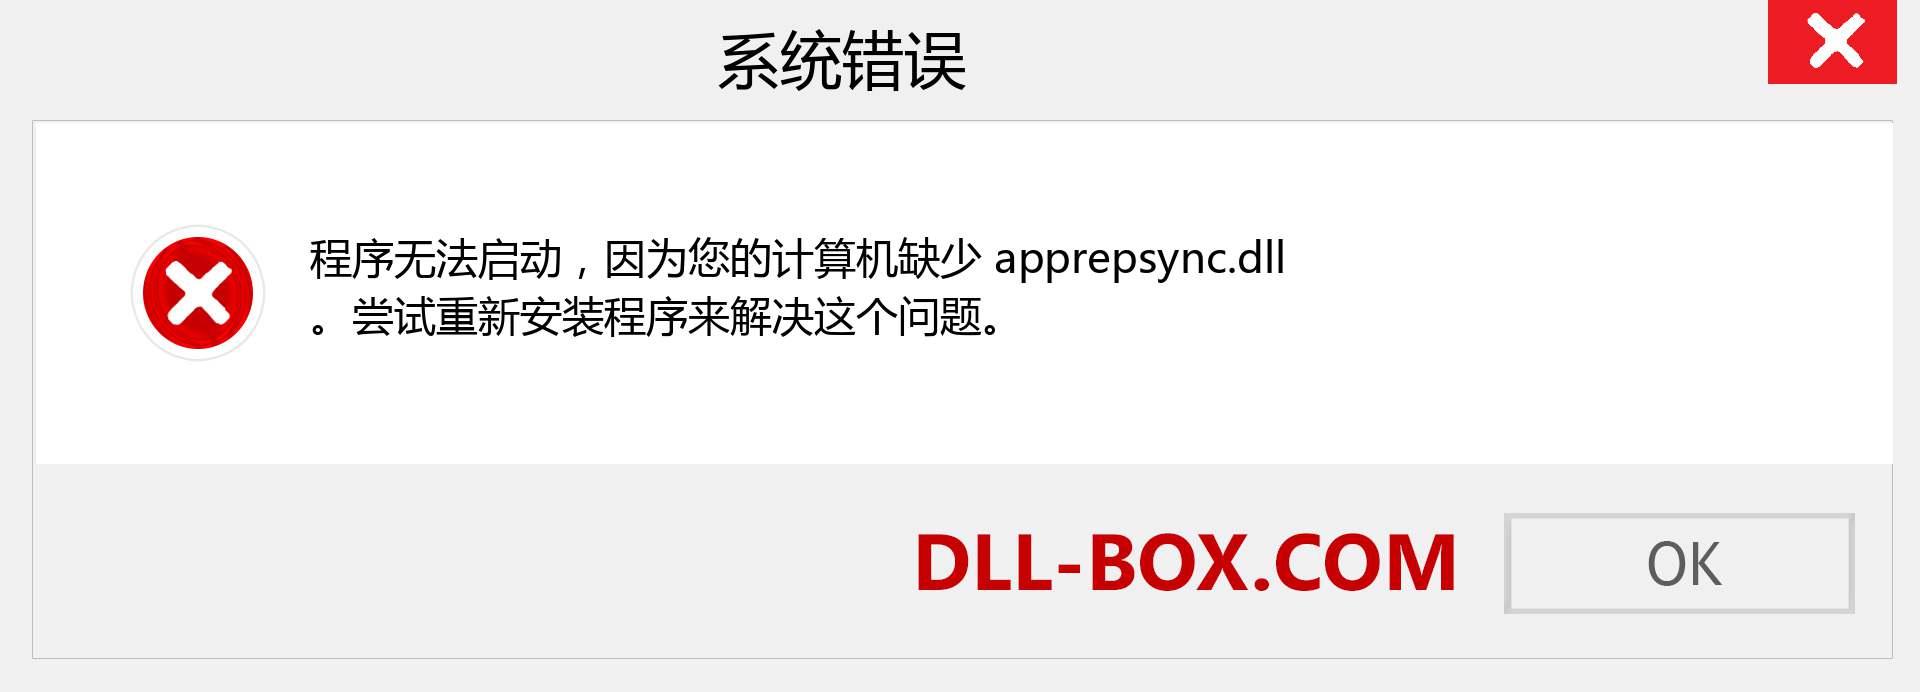 apprepsync.dll 文件丢失？。 适用于 Windows 7、8、10 的下载 - 修复 Windows、照片、图像上的 apprepsync dll 丢失错误